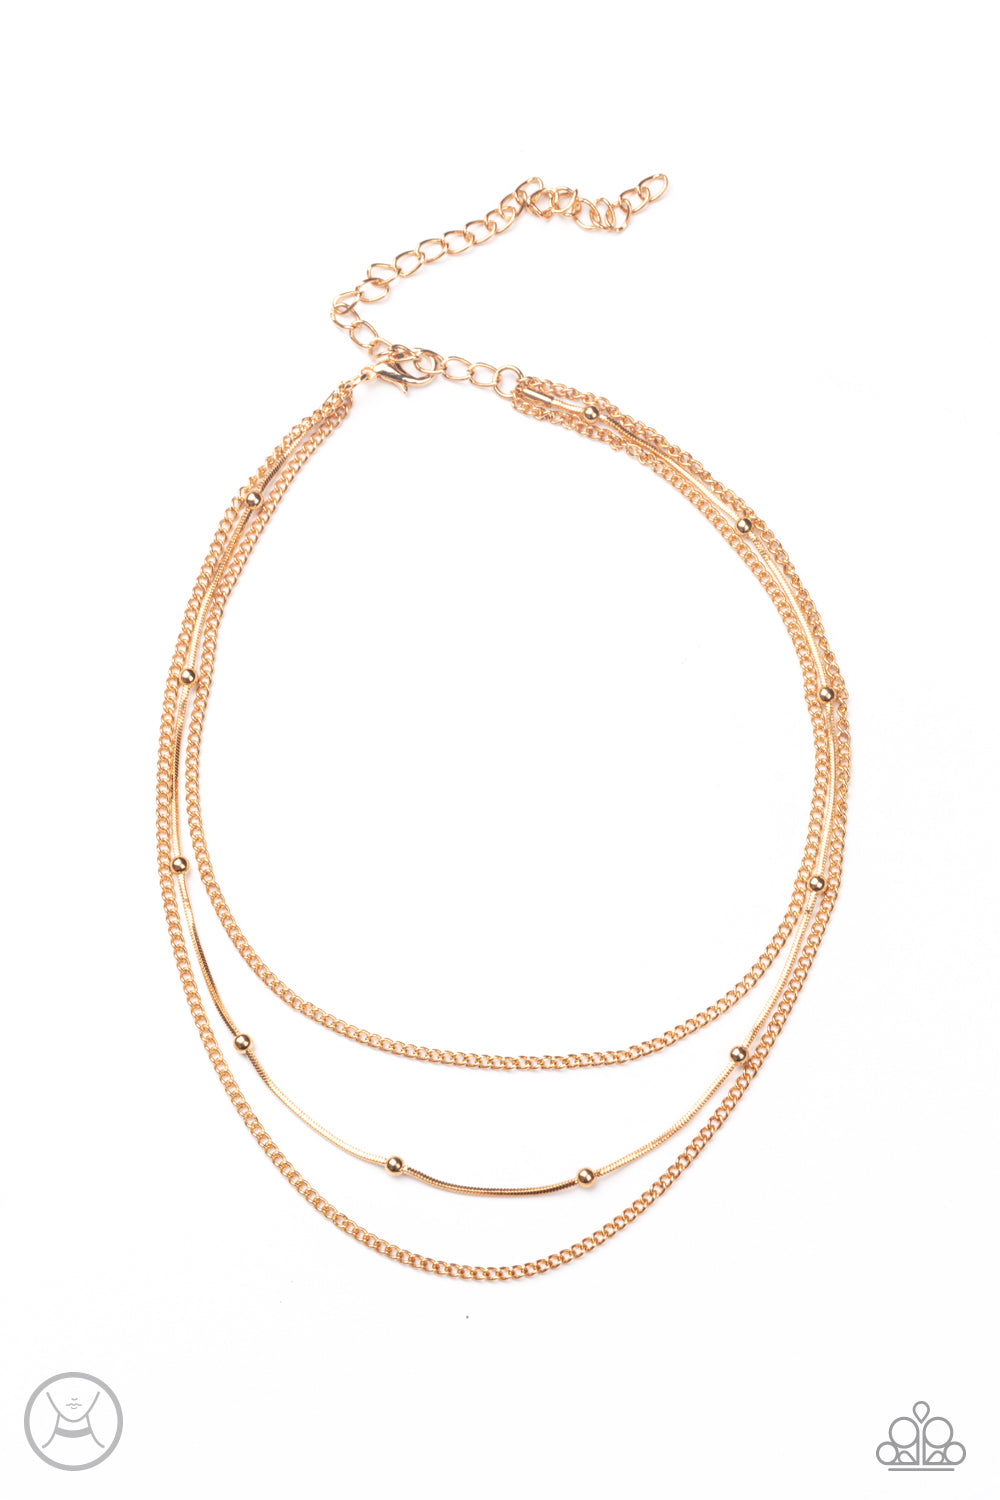 Subtly Stunning - Gold Choker Necklace freeshipping - JewLz4u Gemstone Gallery